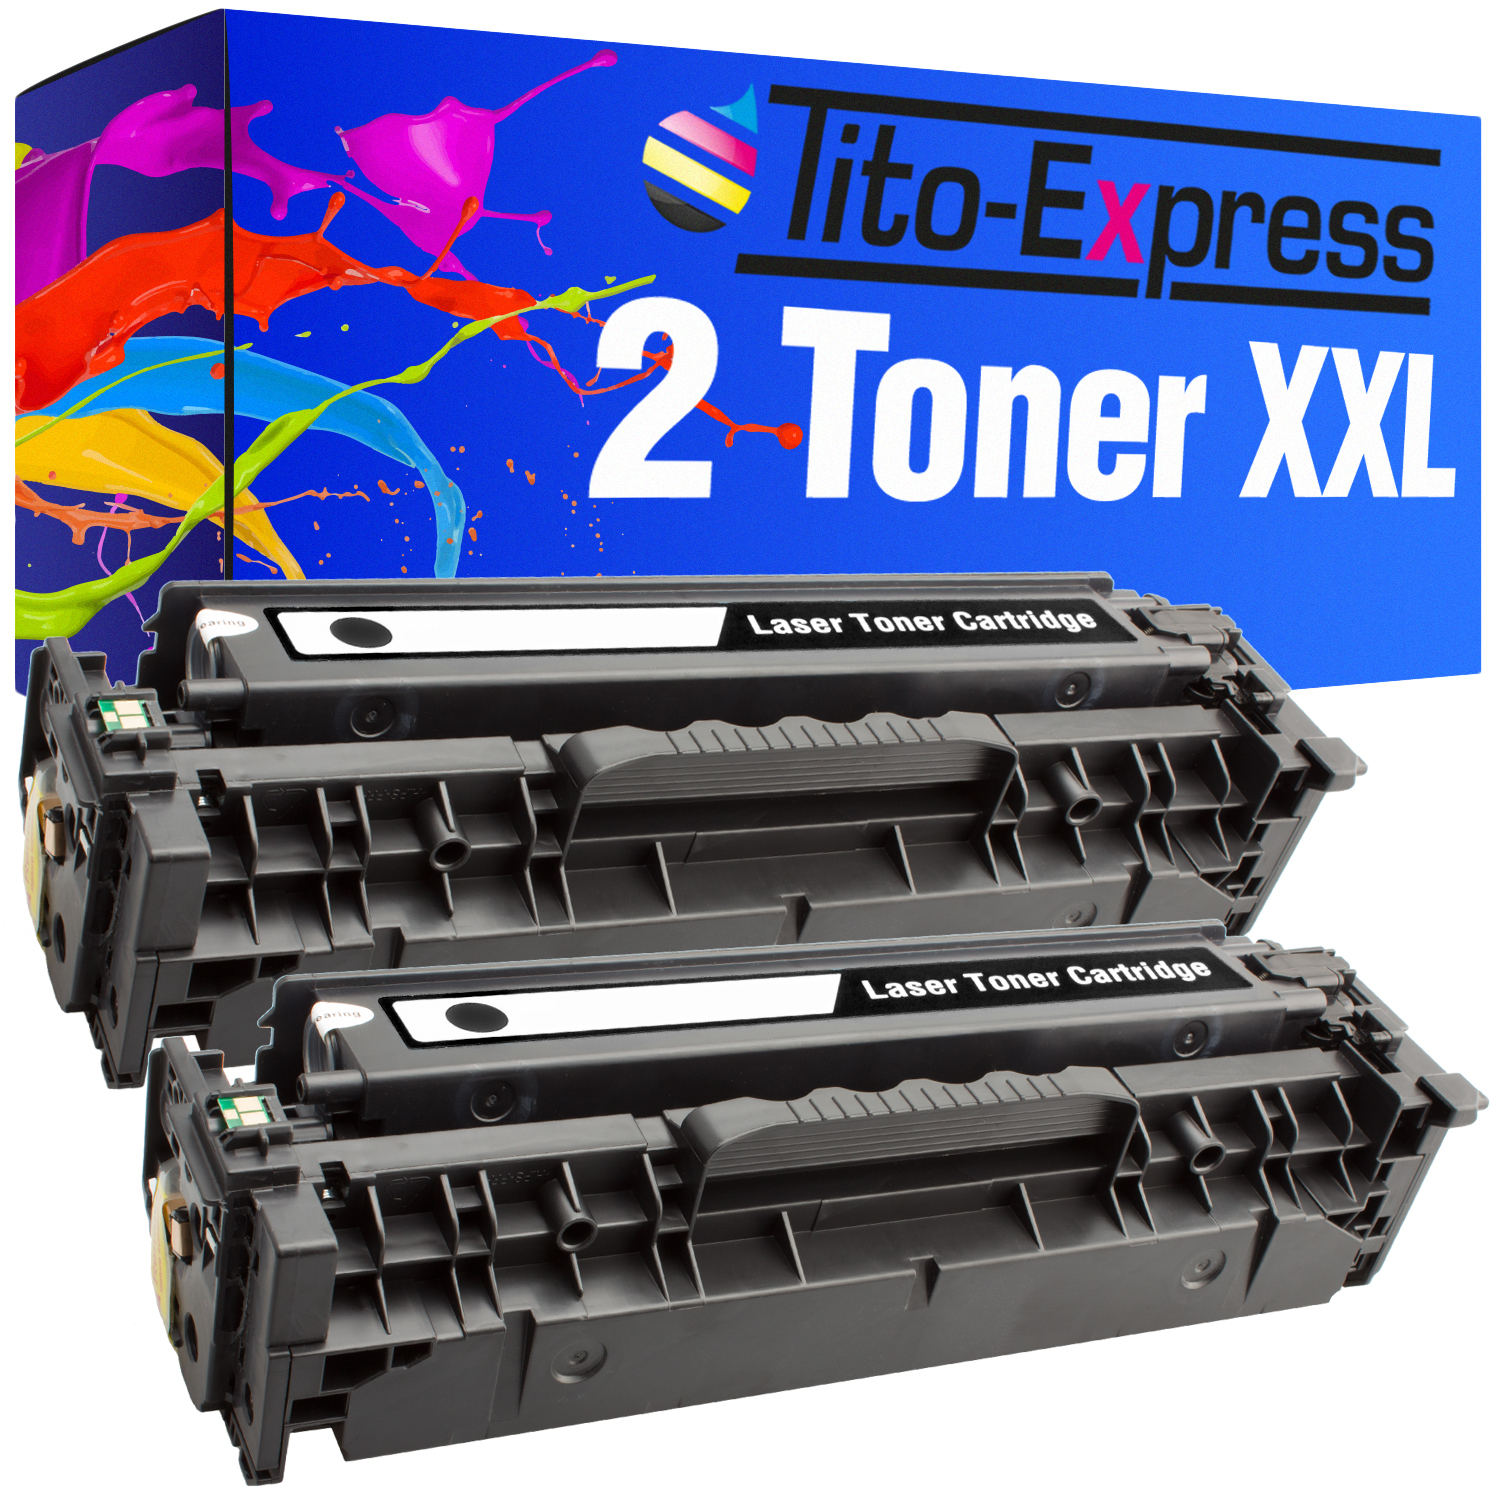 Toner Toner HP 2 PLATINUMSERIE 312X black TITO-EXPRESS (CF380X) ersetzt